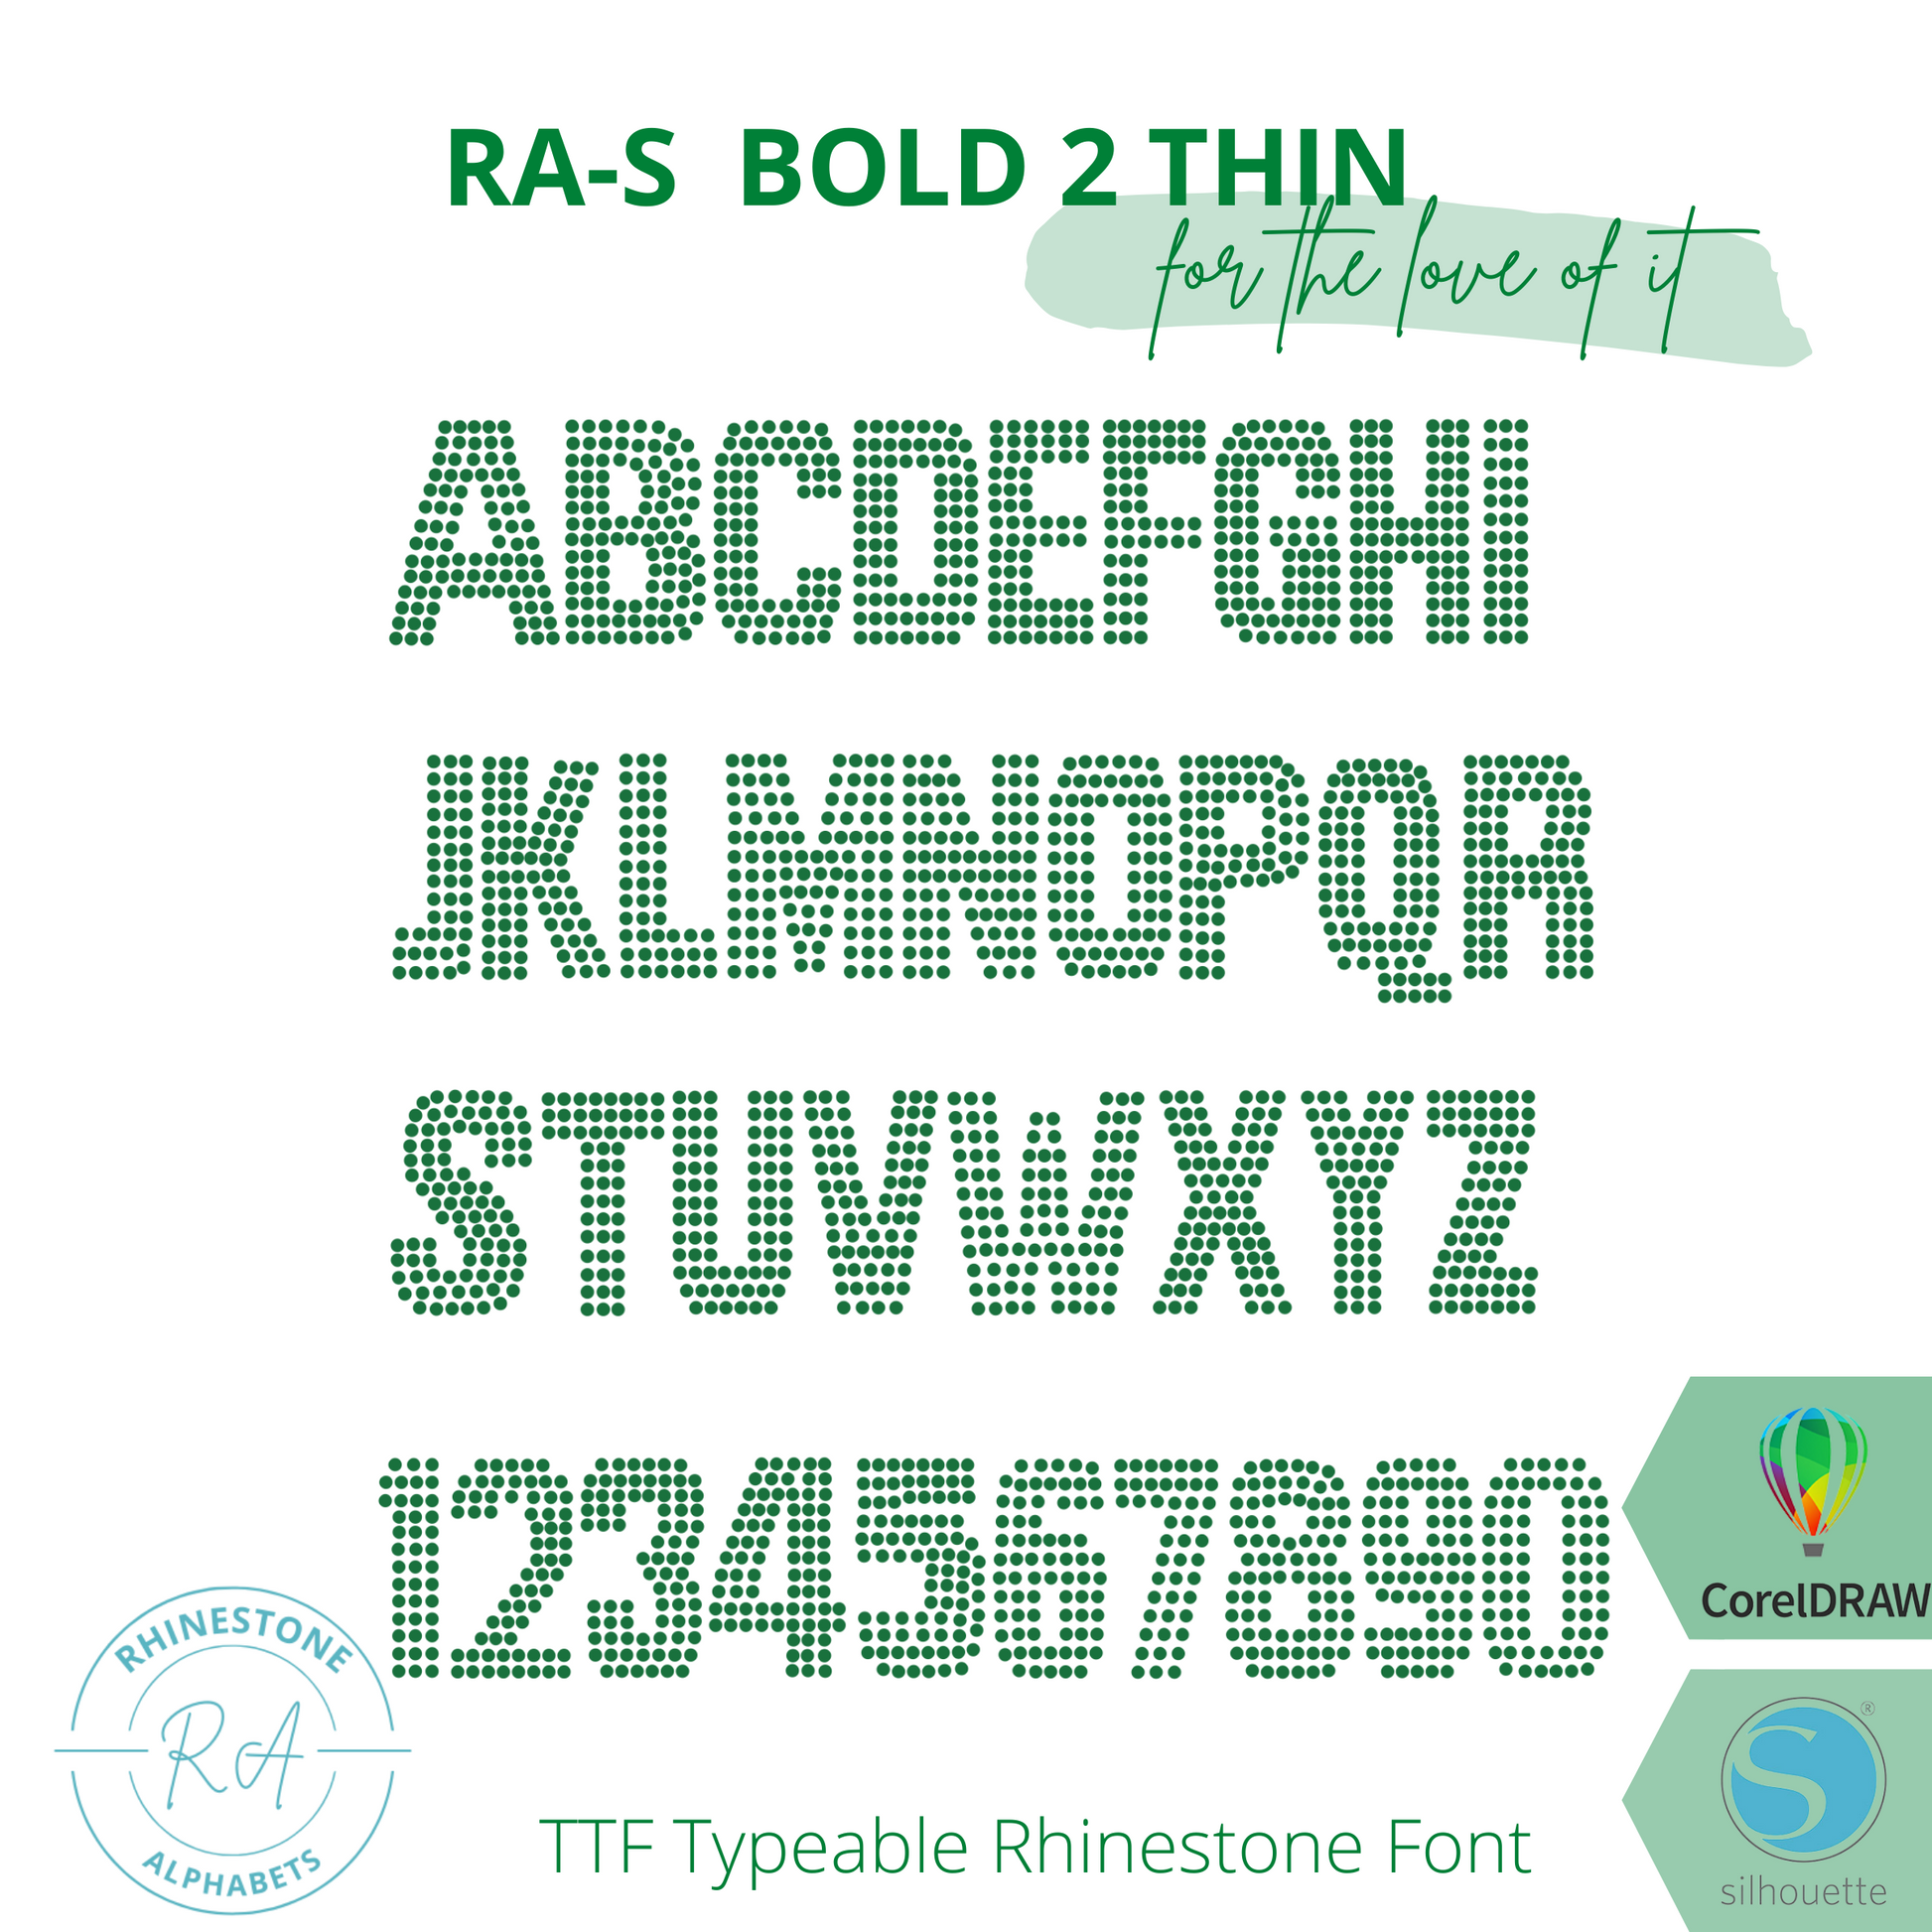 RA-S Bold 2 Thin - RhinestoneAlphabets